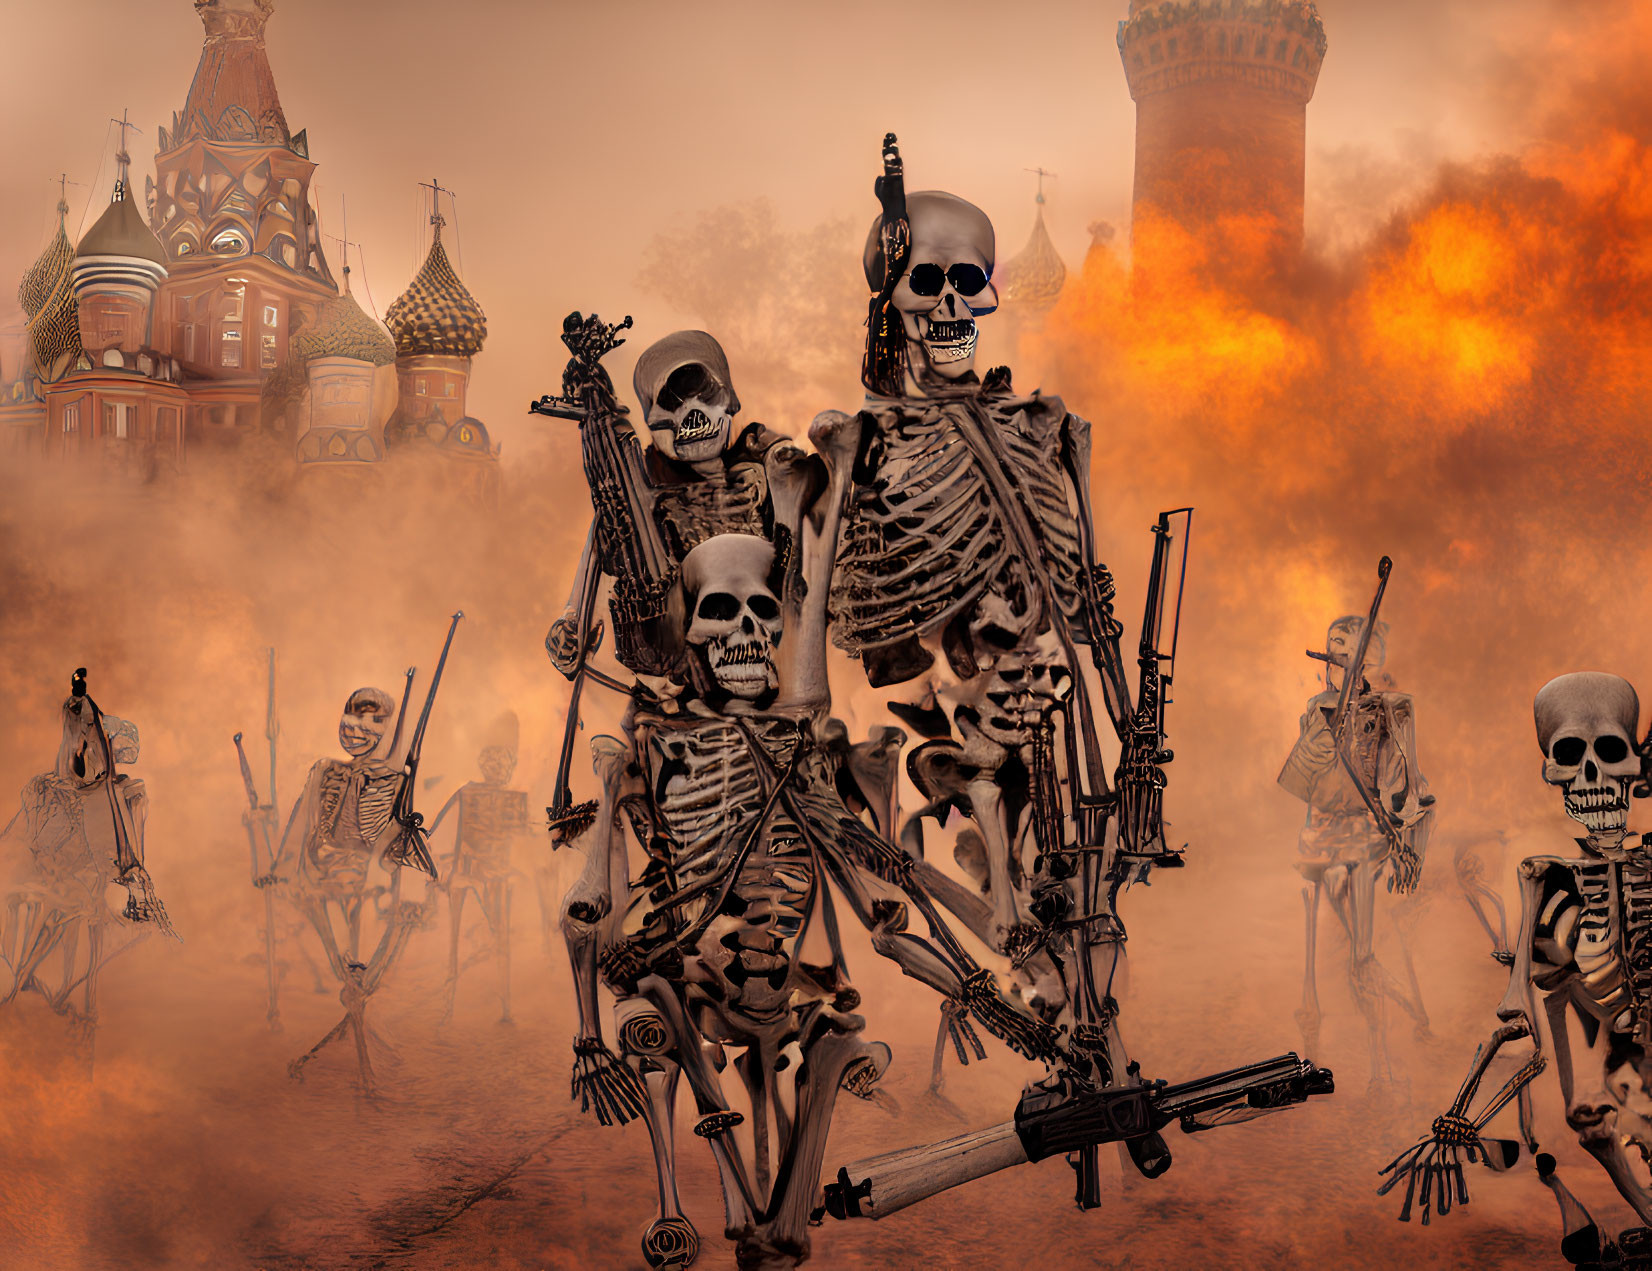 Skeletons going to burn out Kremlin